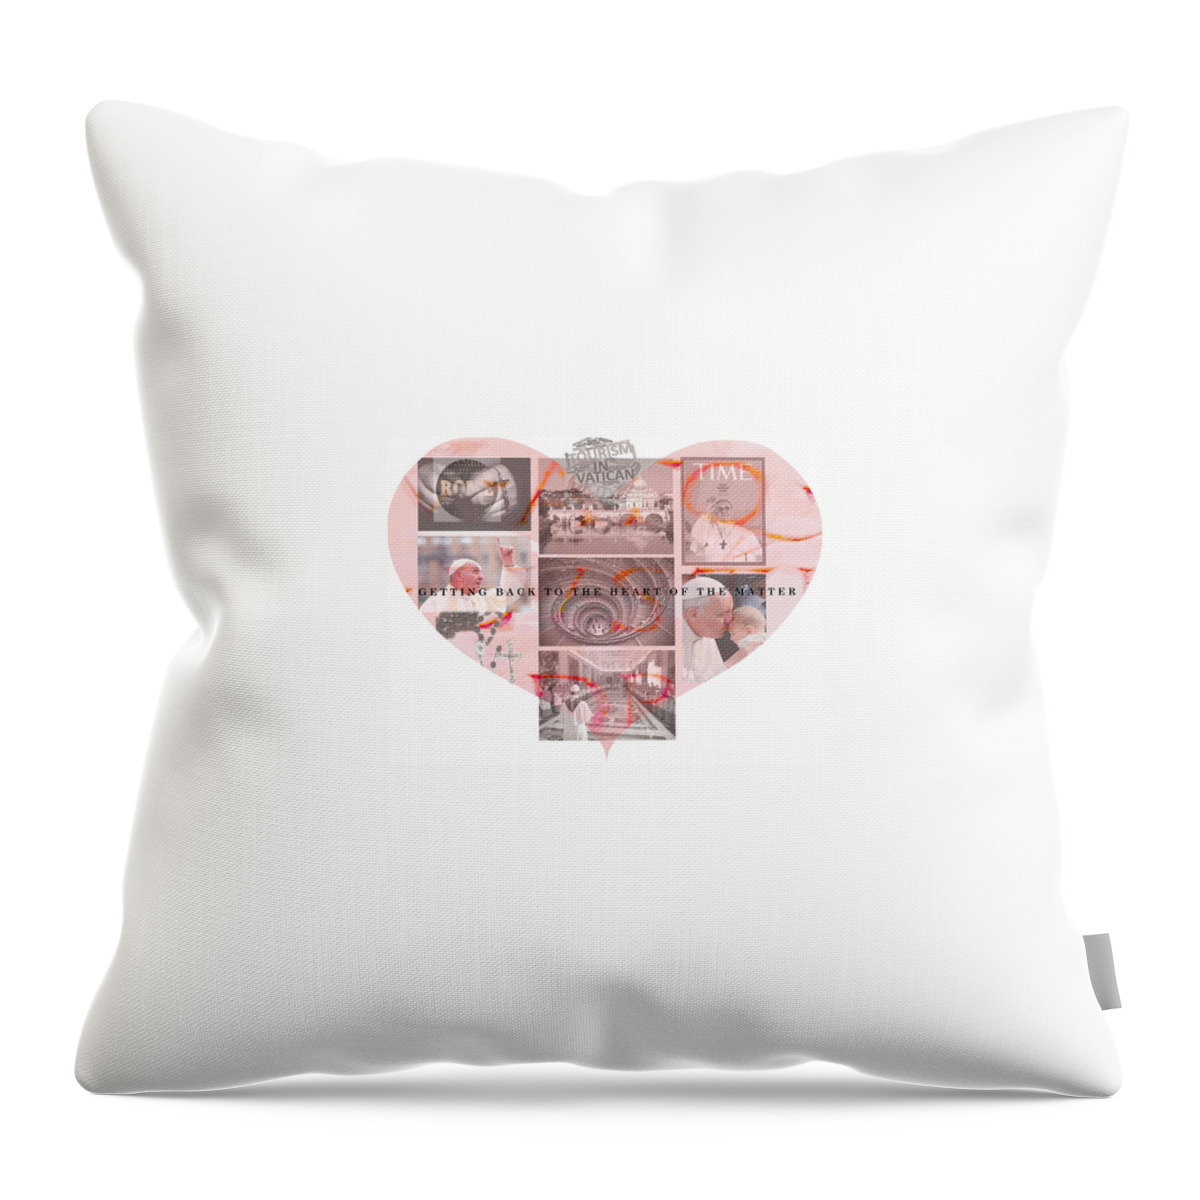 Vatican City Throw Pillow featuring the digital art My Vatican City Mood Board by Teri Schuster